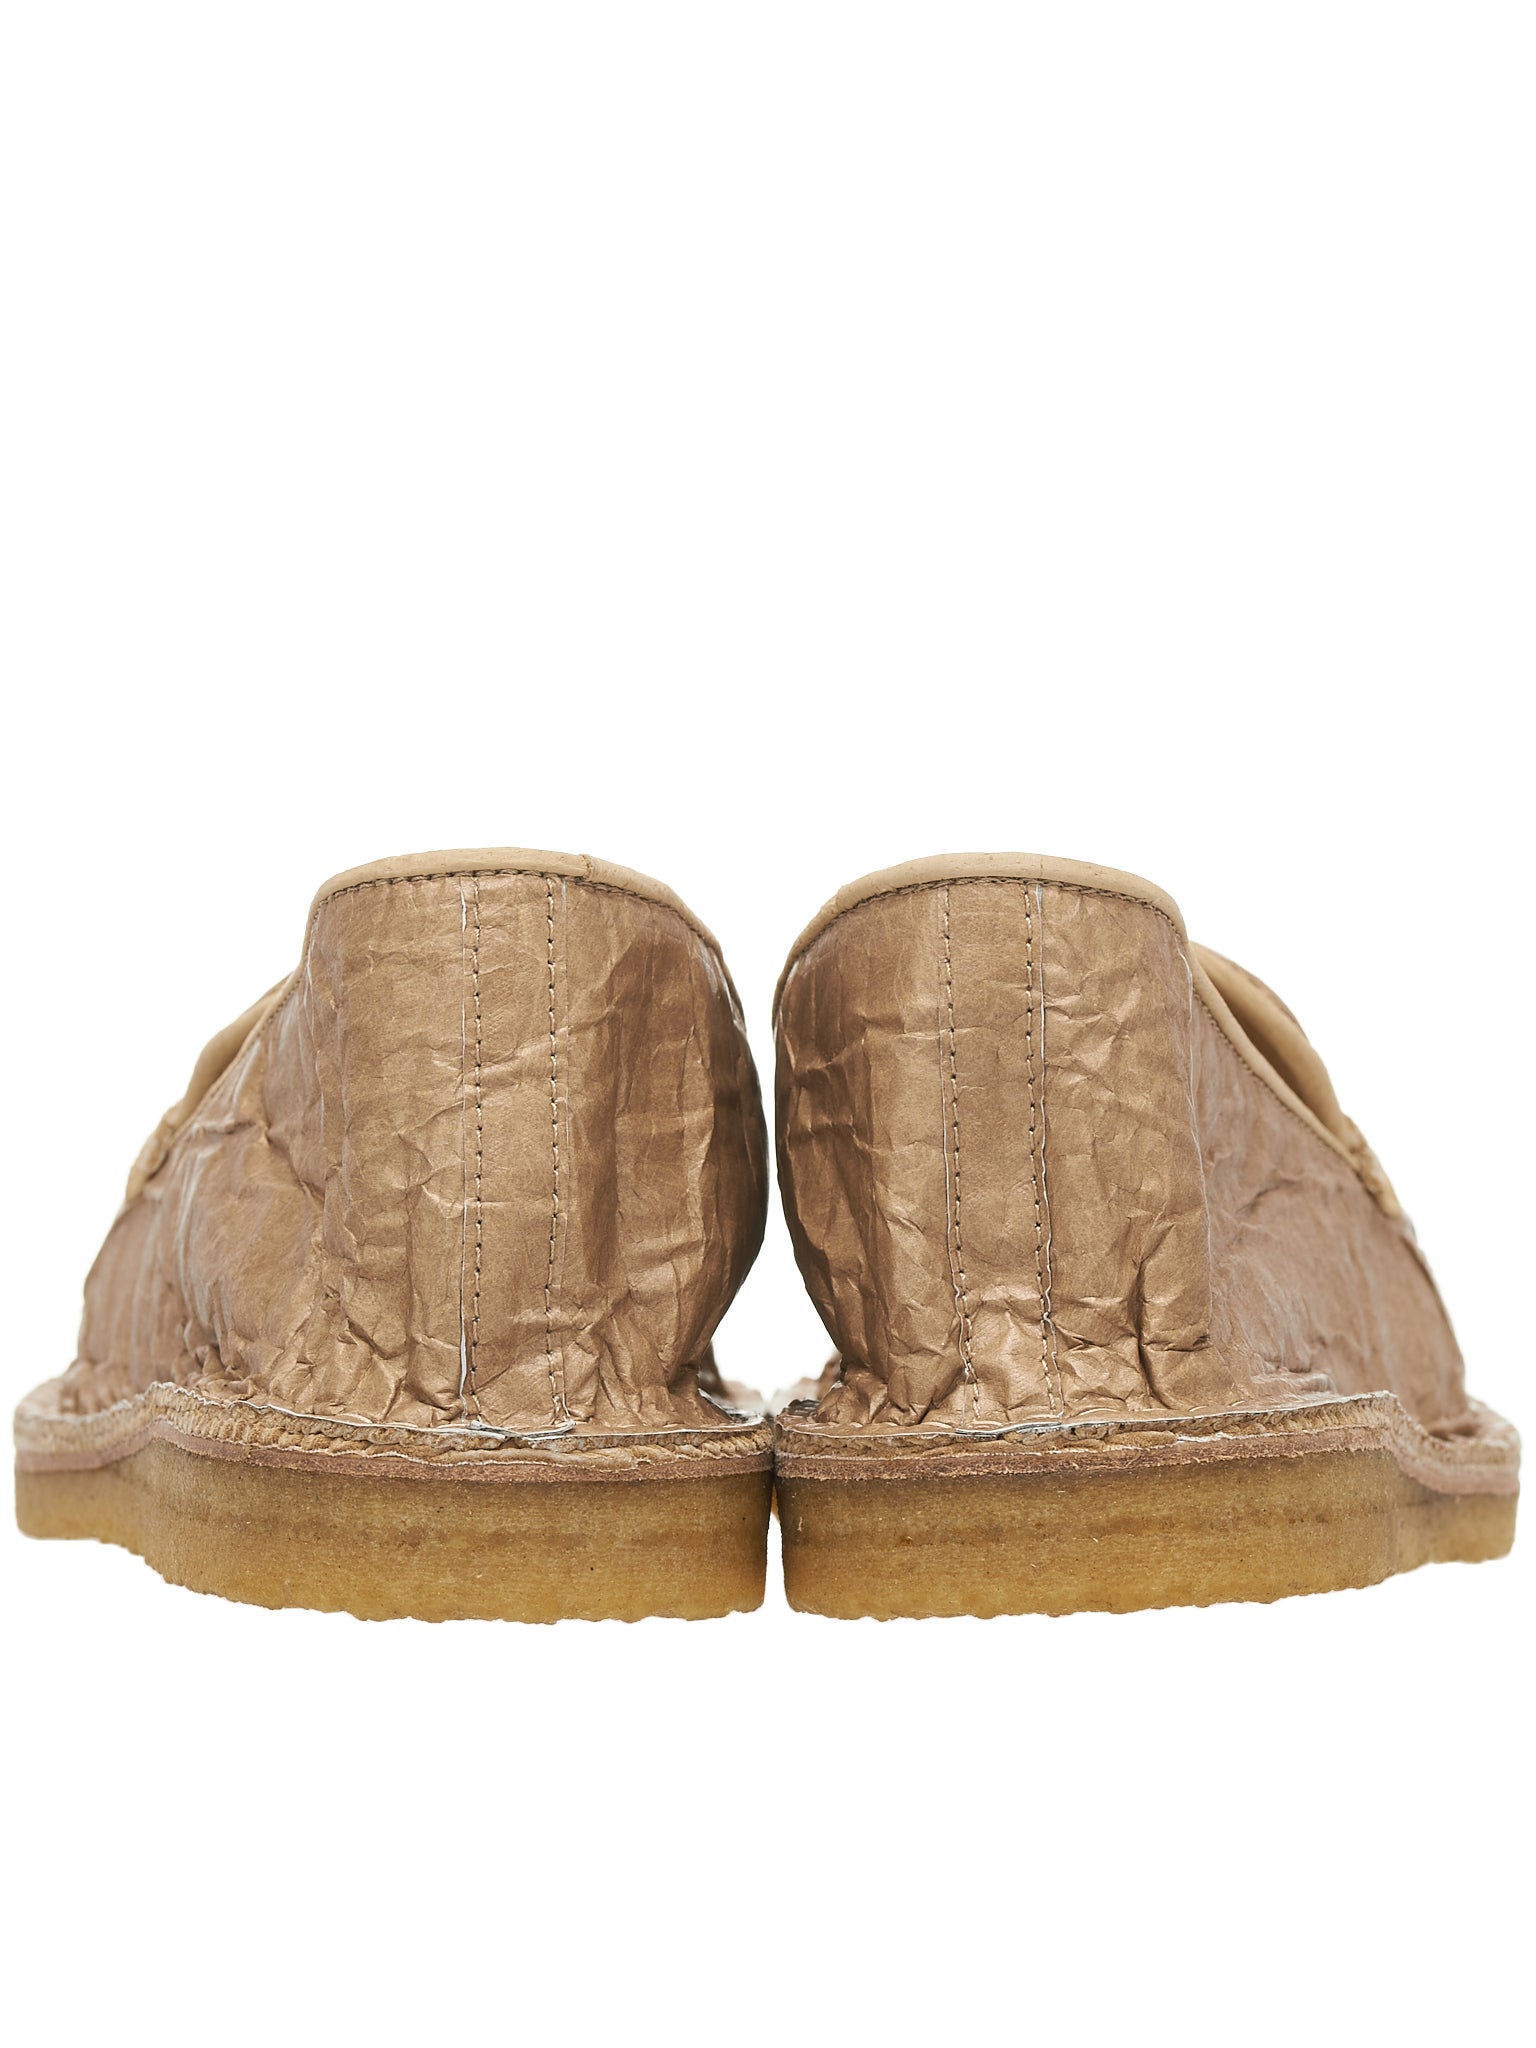 Cardboard Slip-On Shoes (B02QSE-01-BEIGE)